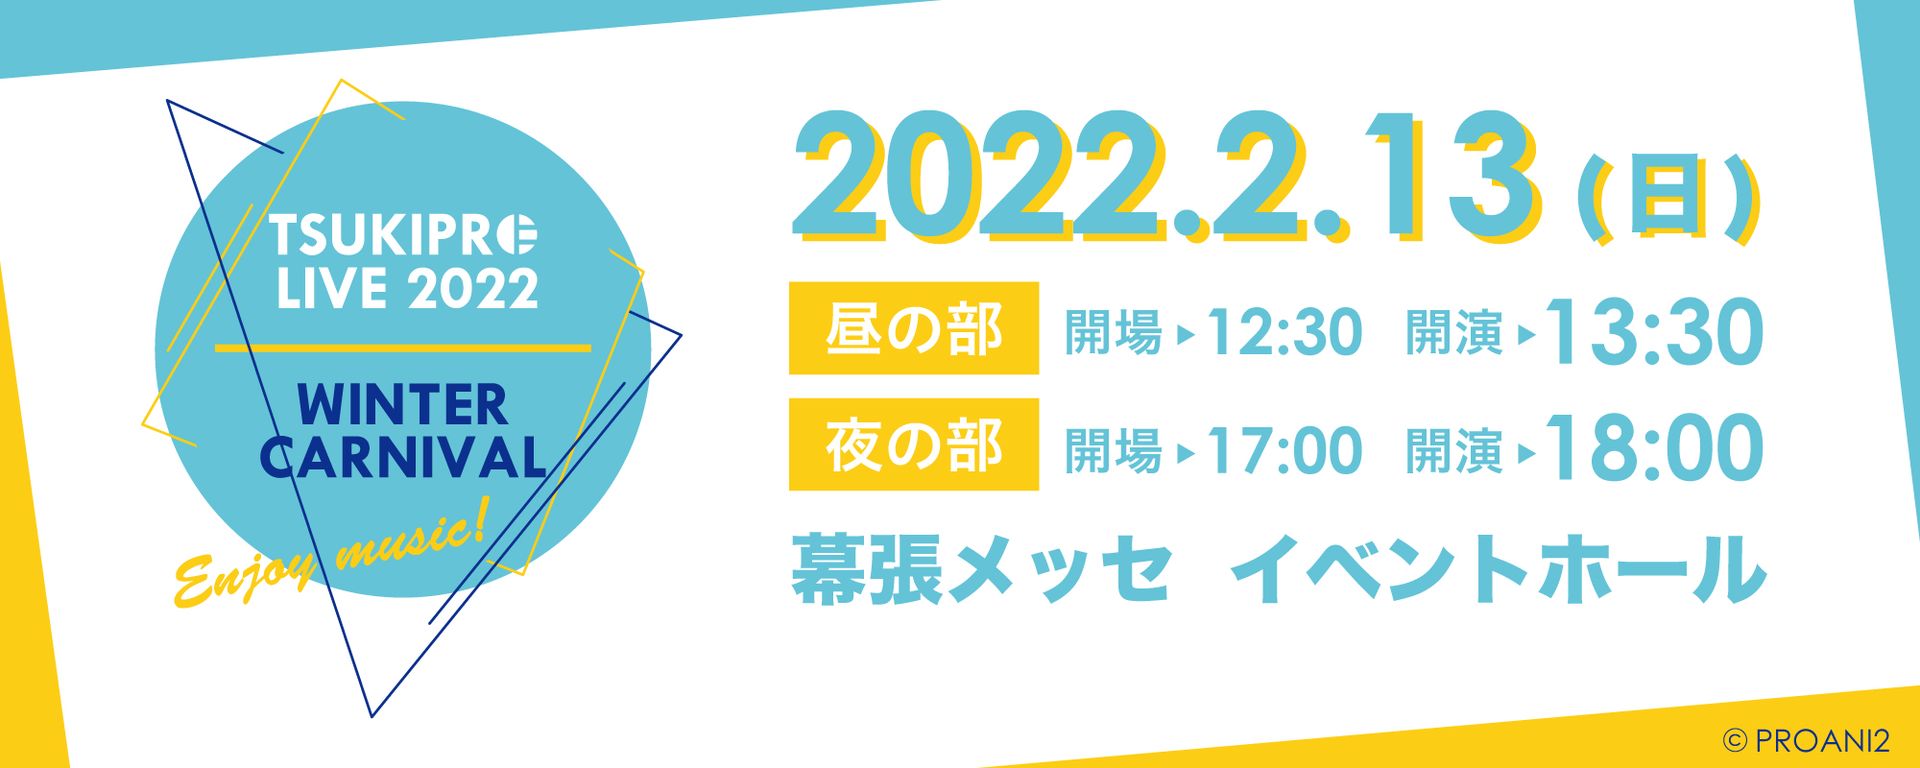 [Streaming+] TSUKIPRO LIVE 2022 WINTER CARNIVAL